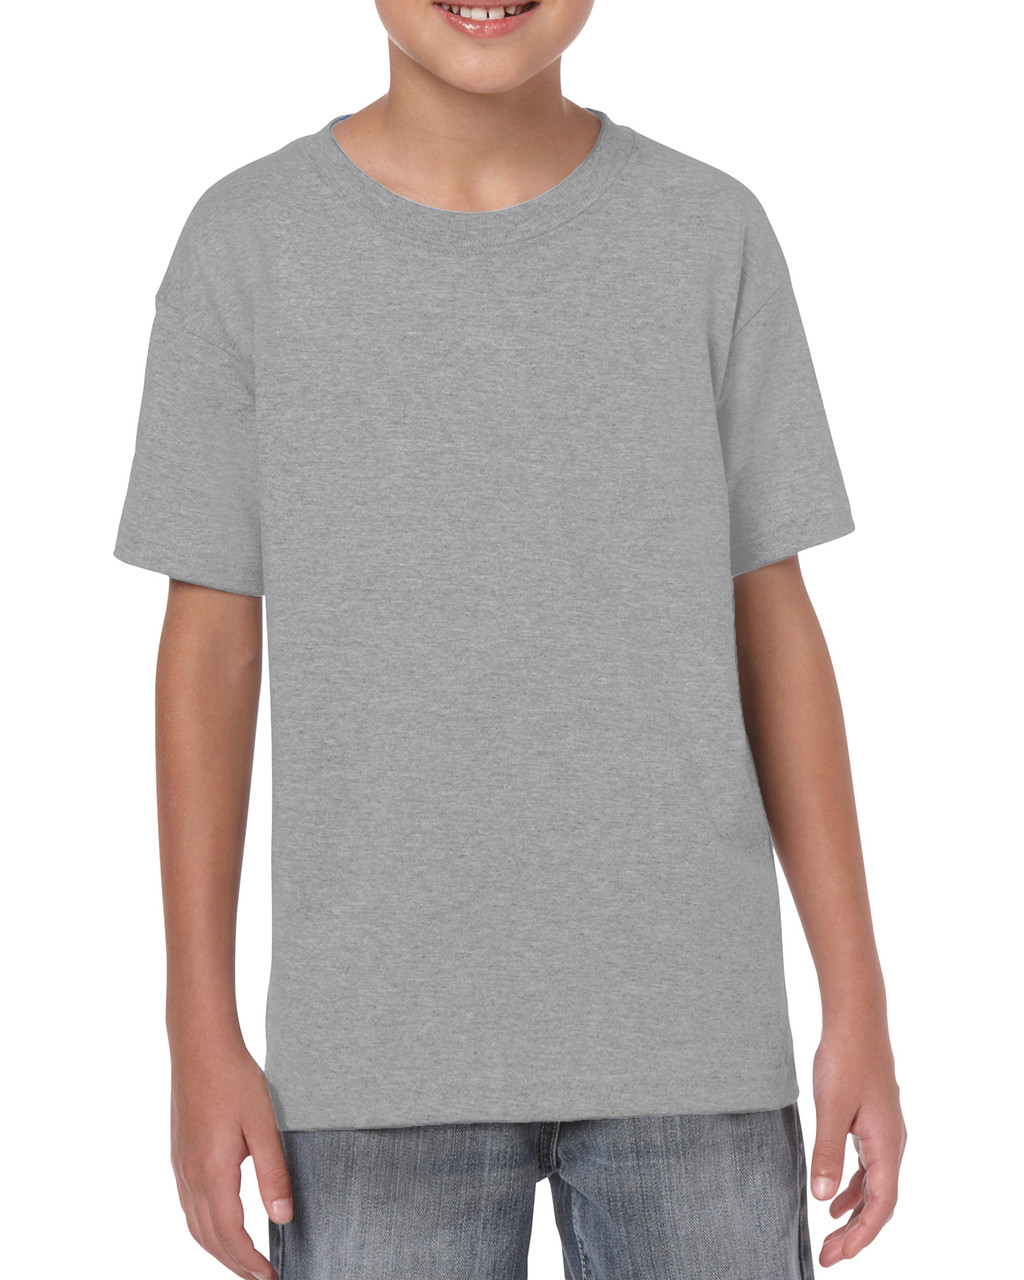 Gildan Softstyle Youth t-shirt Work Wear Causal Top Sports Grey 